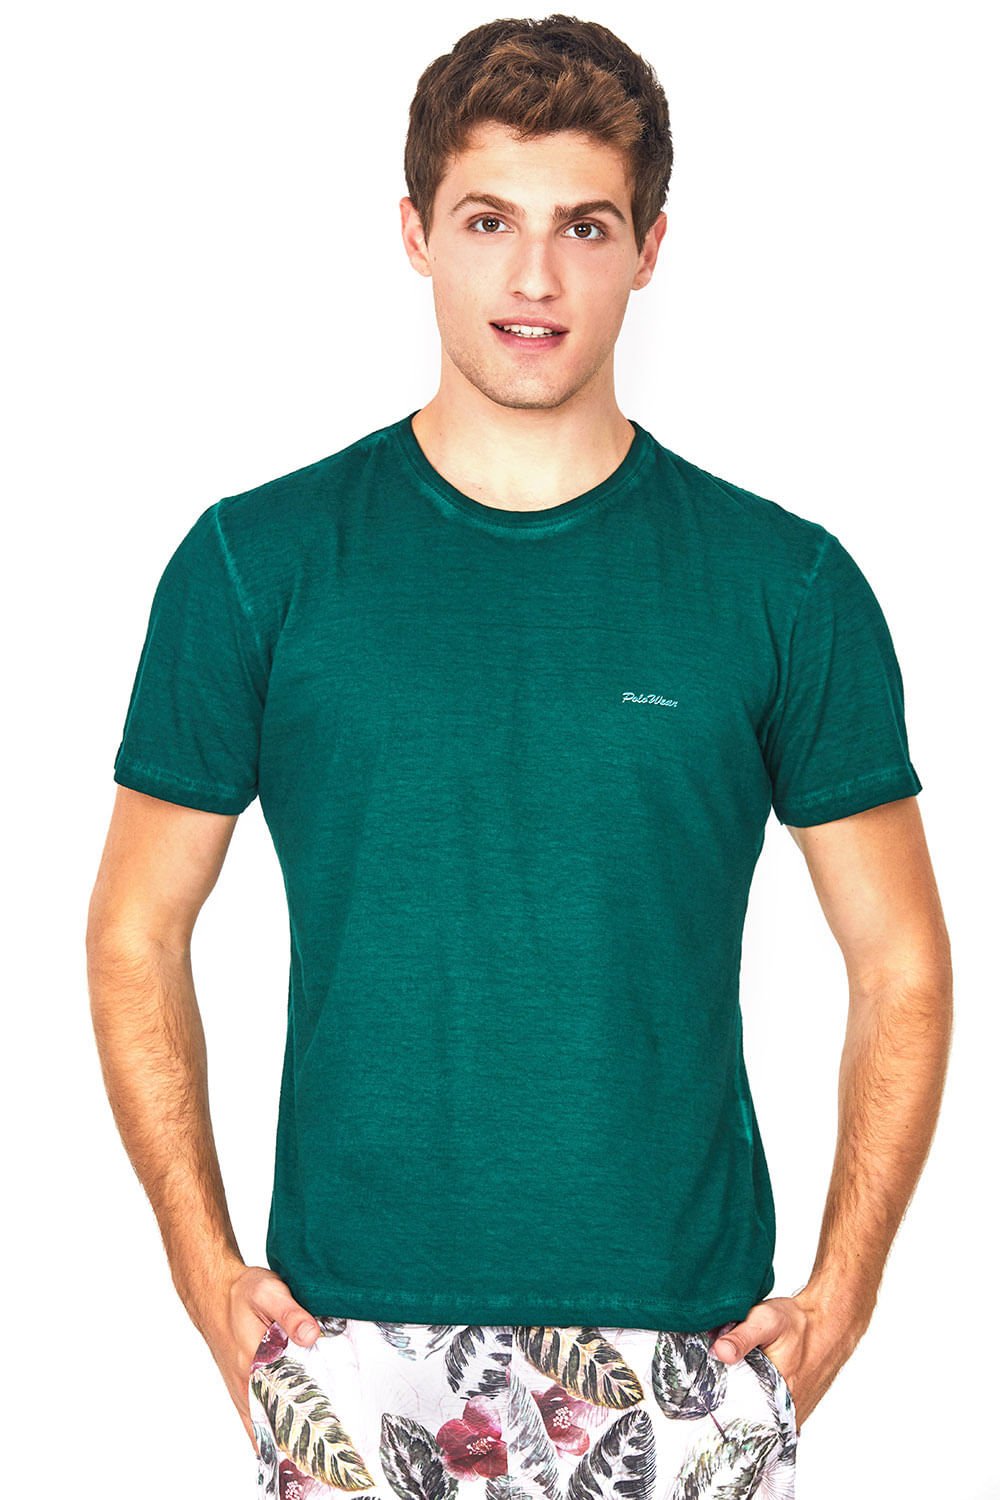 Camiseta Masculina Relevo Polo Wear Verde Escuro